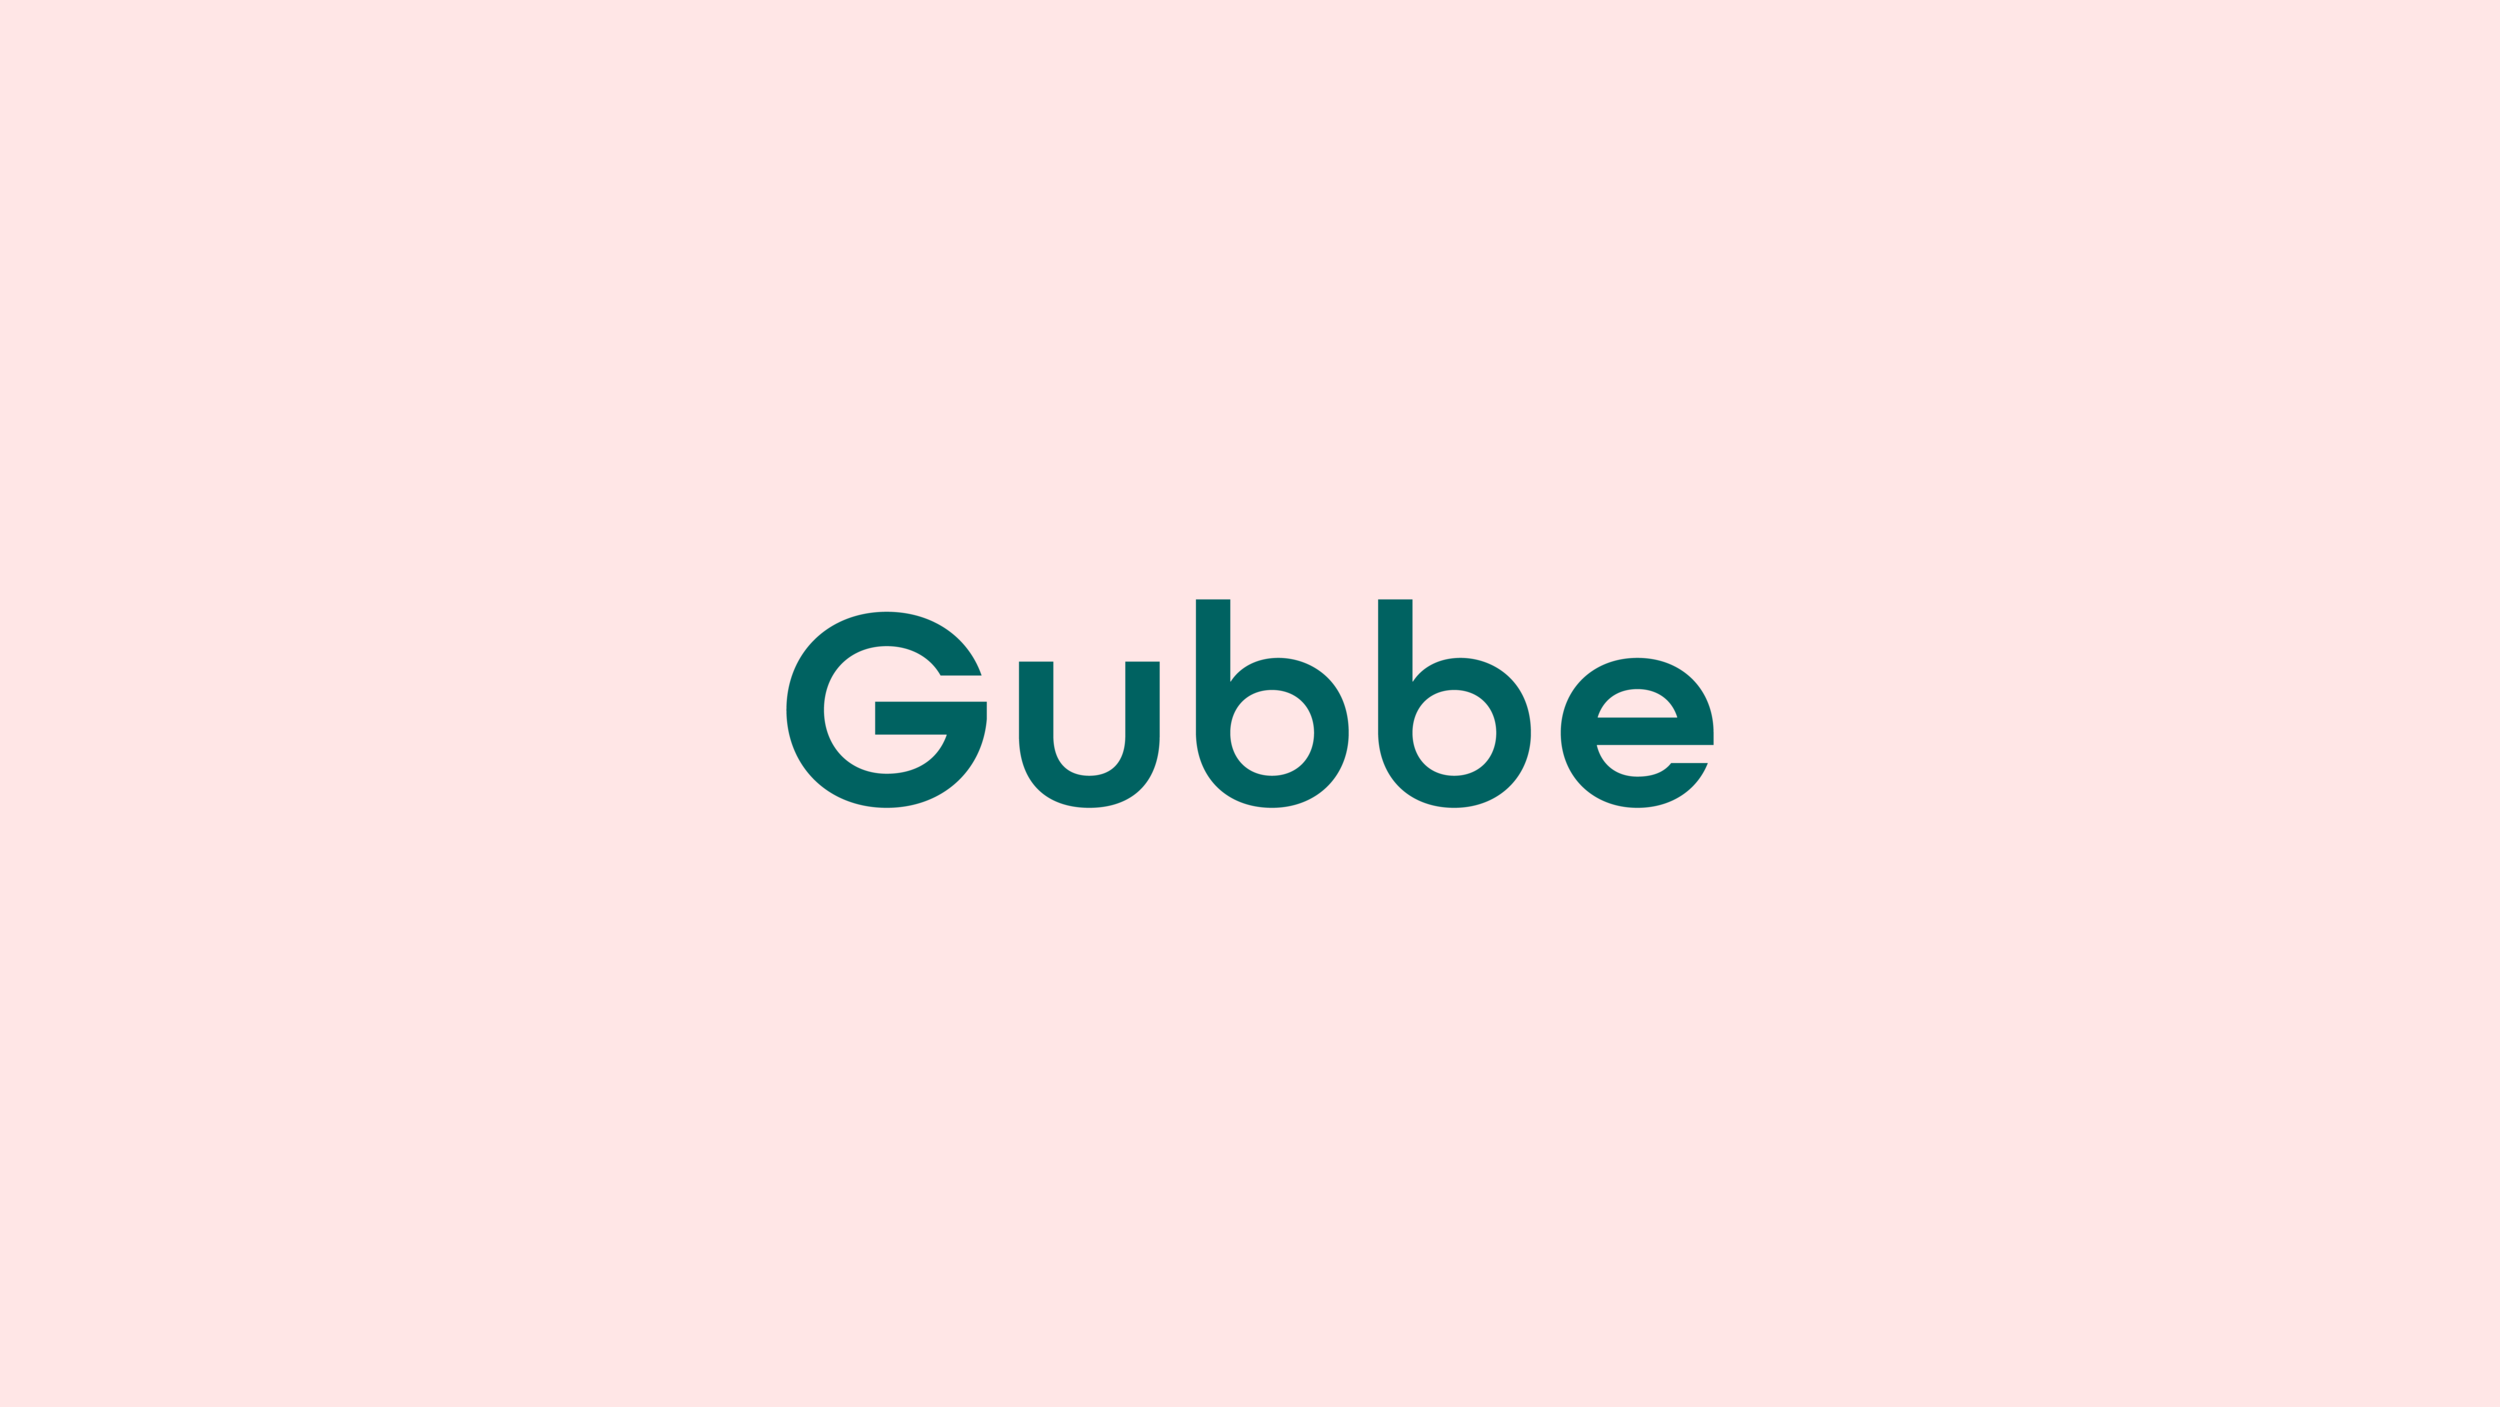 gubbe logo-02.png